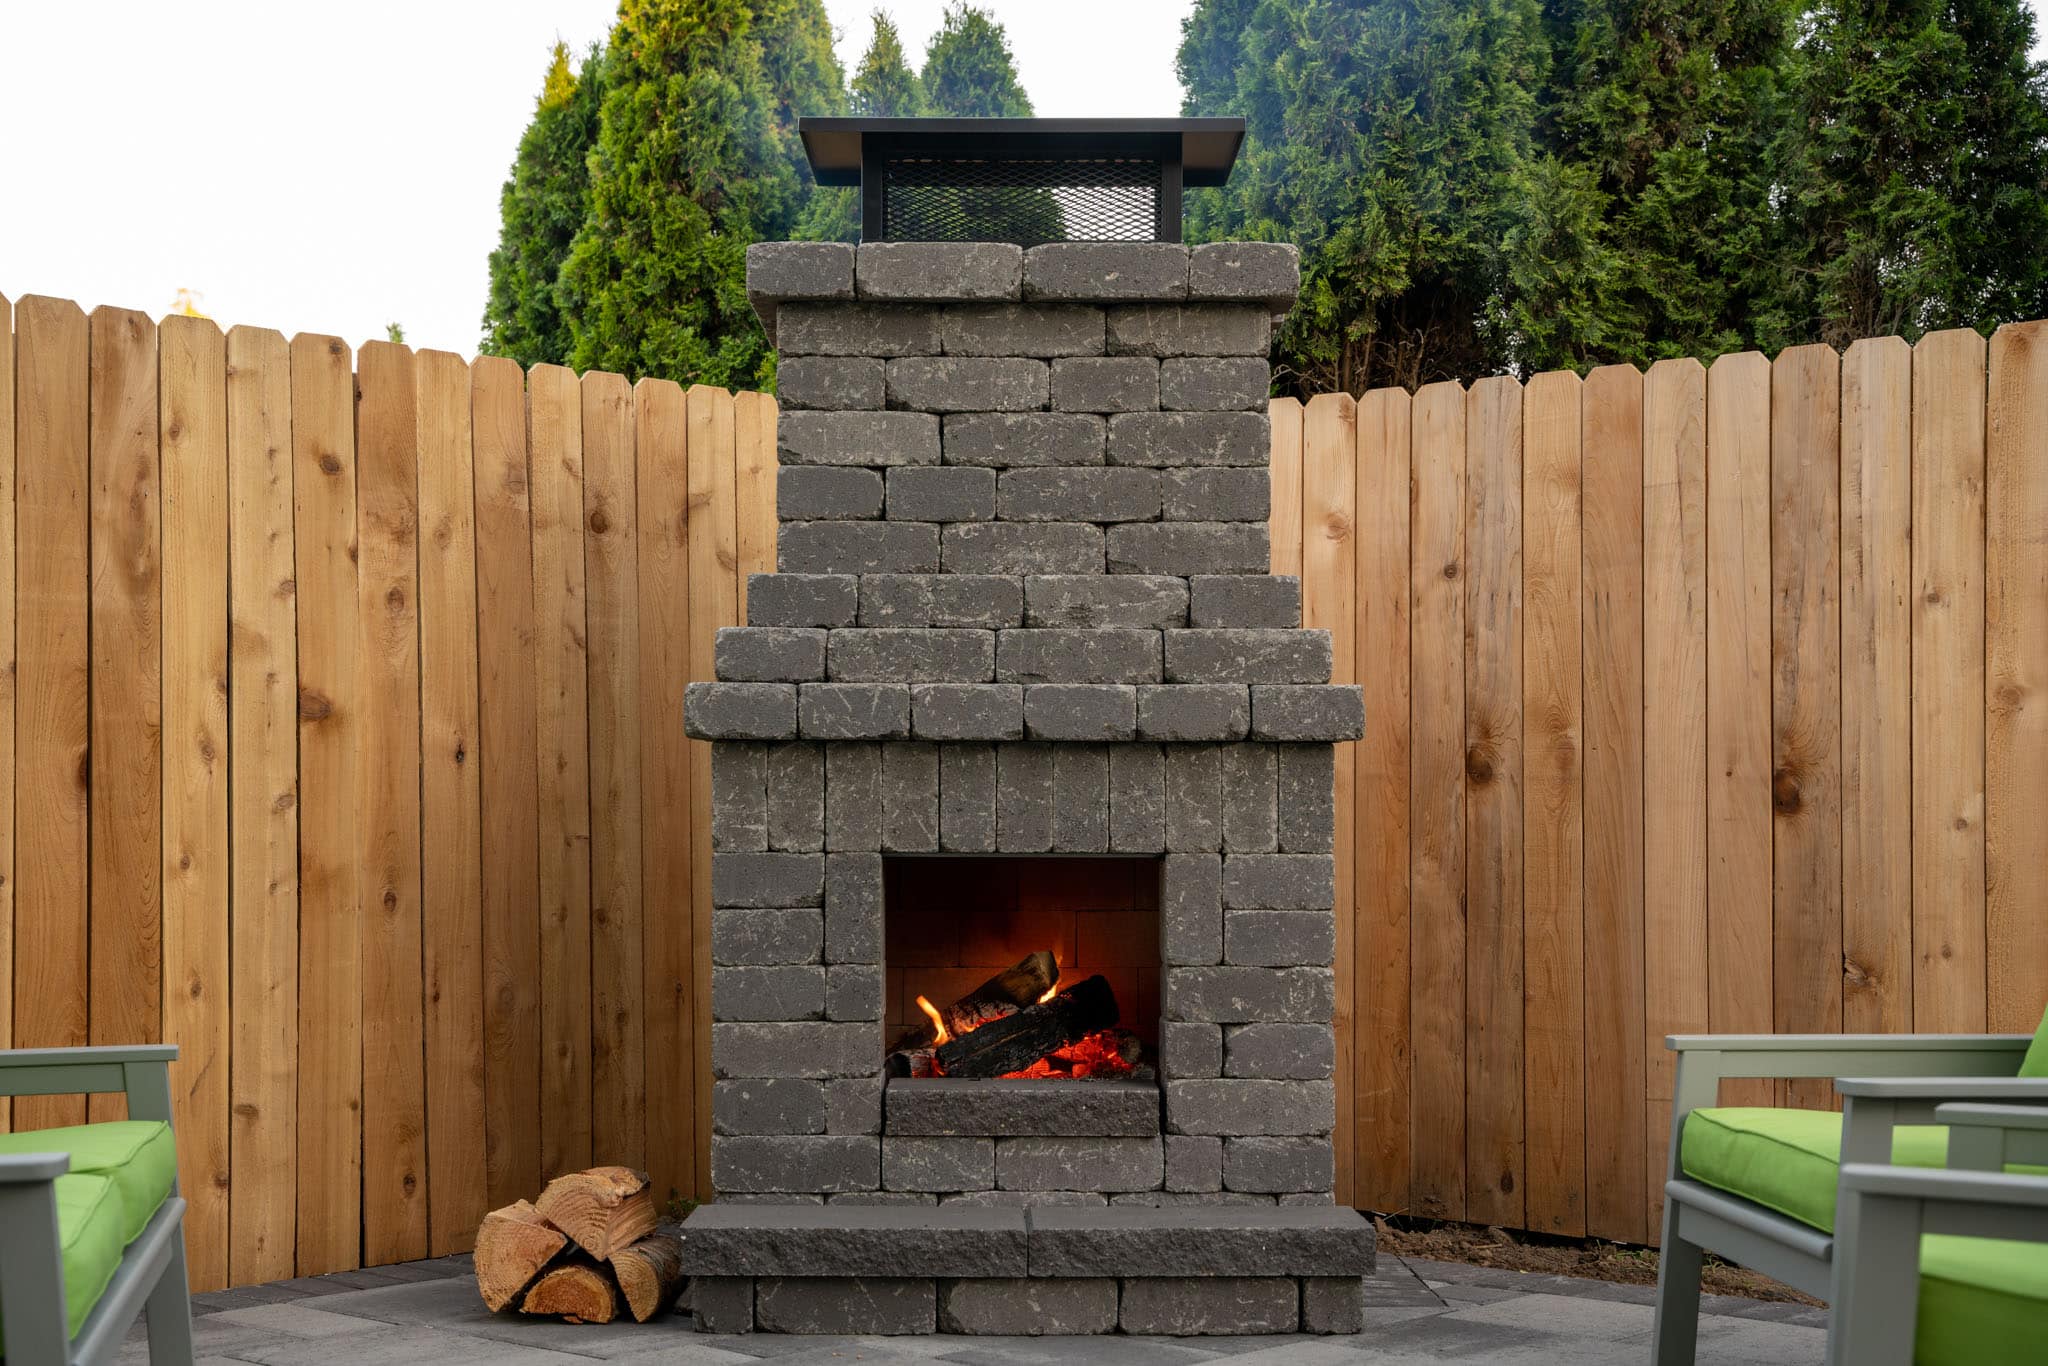 How To Install Firebrick Stone Fireplace Western Interlock Deschutes Fireplace Kit 9 